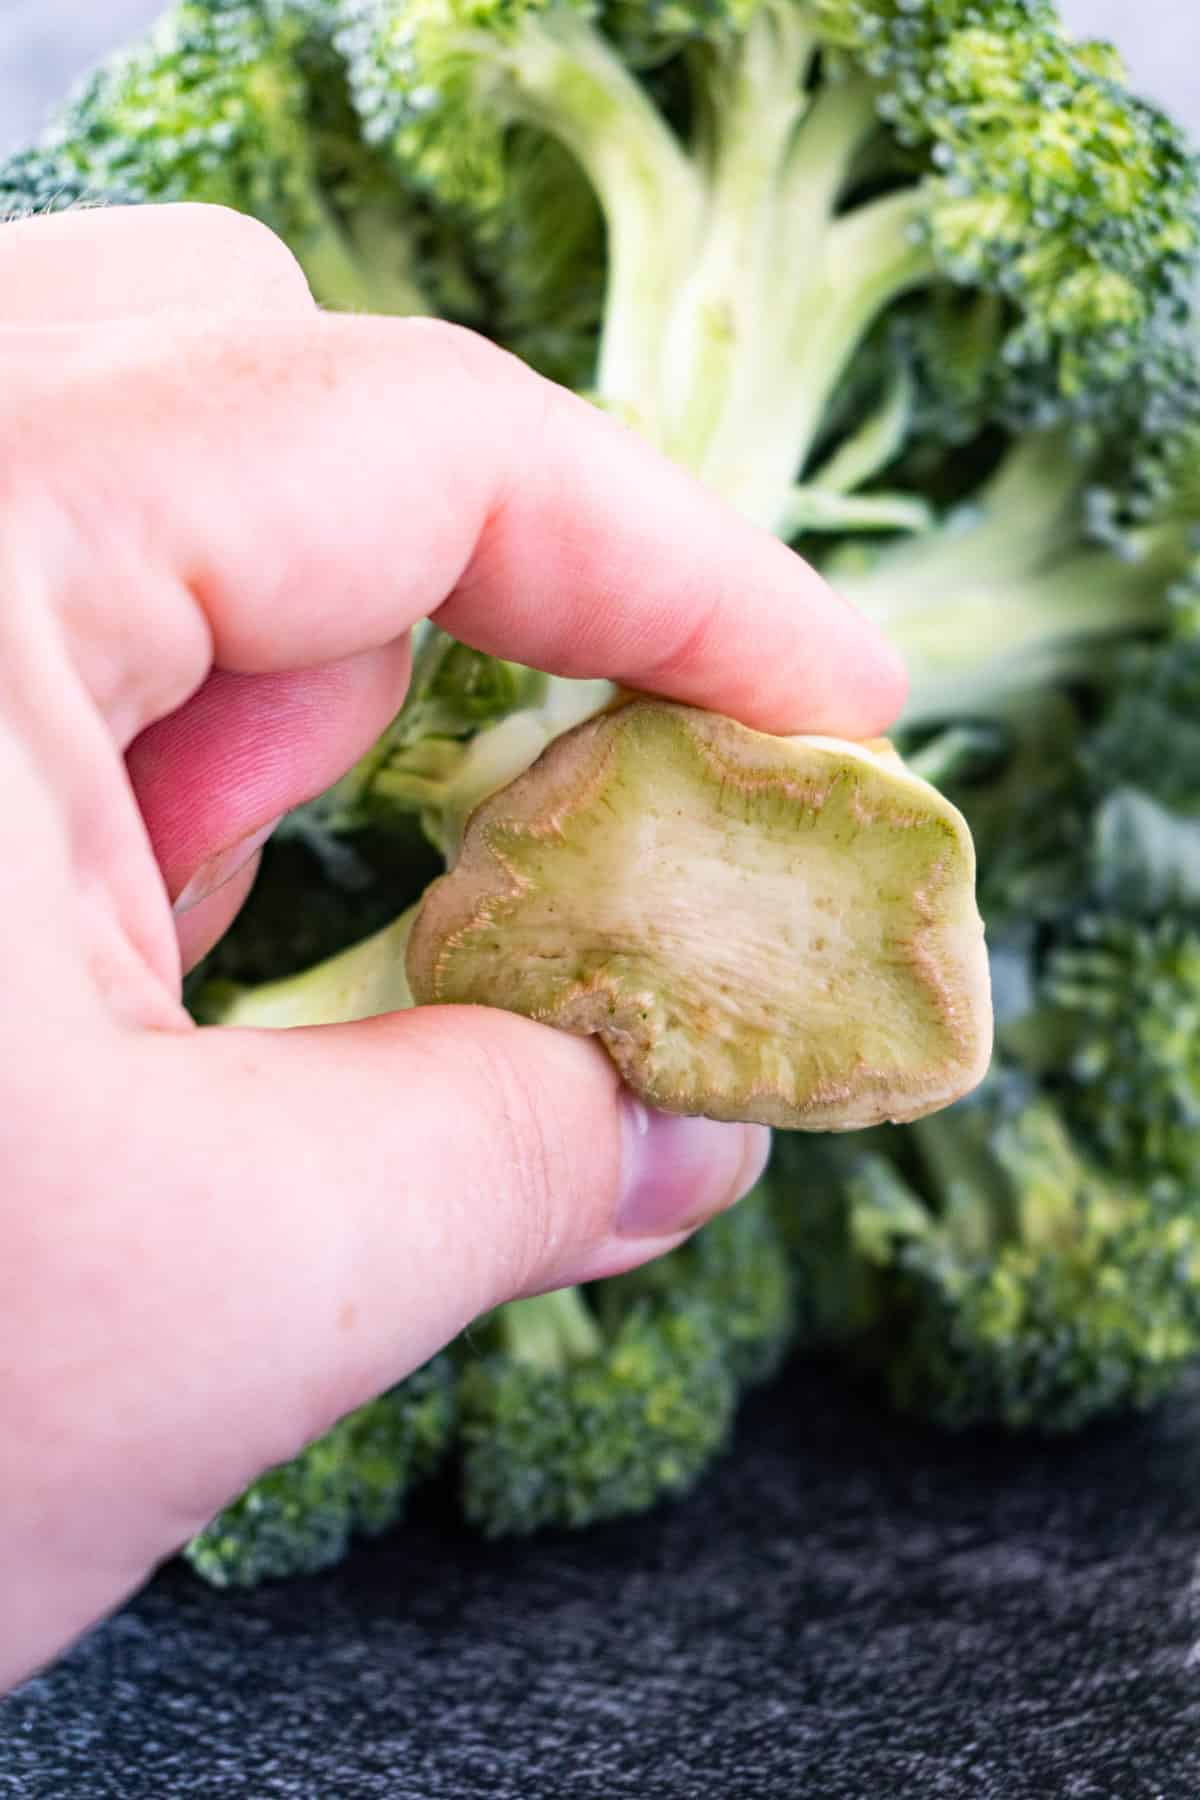 broccolis stem is squishy